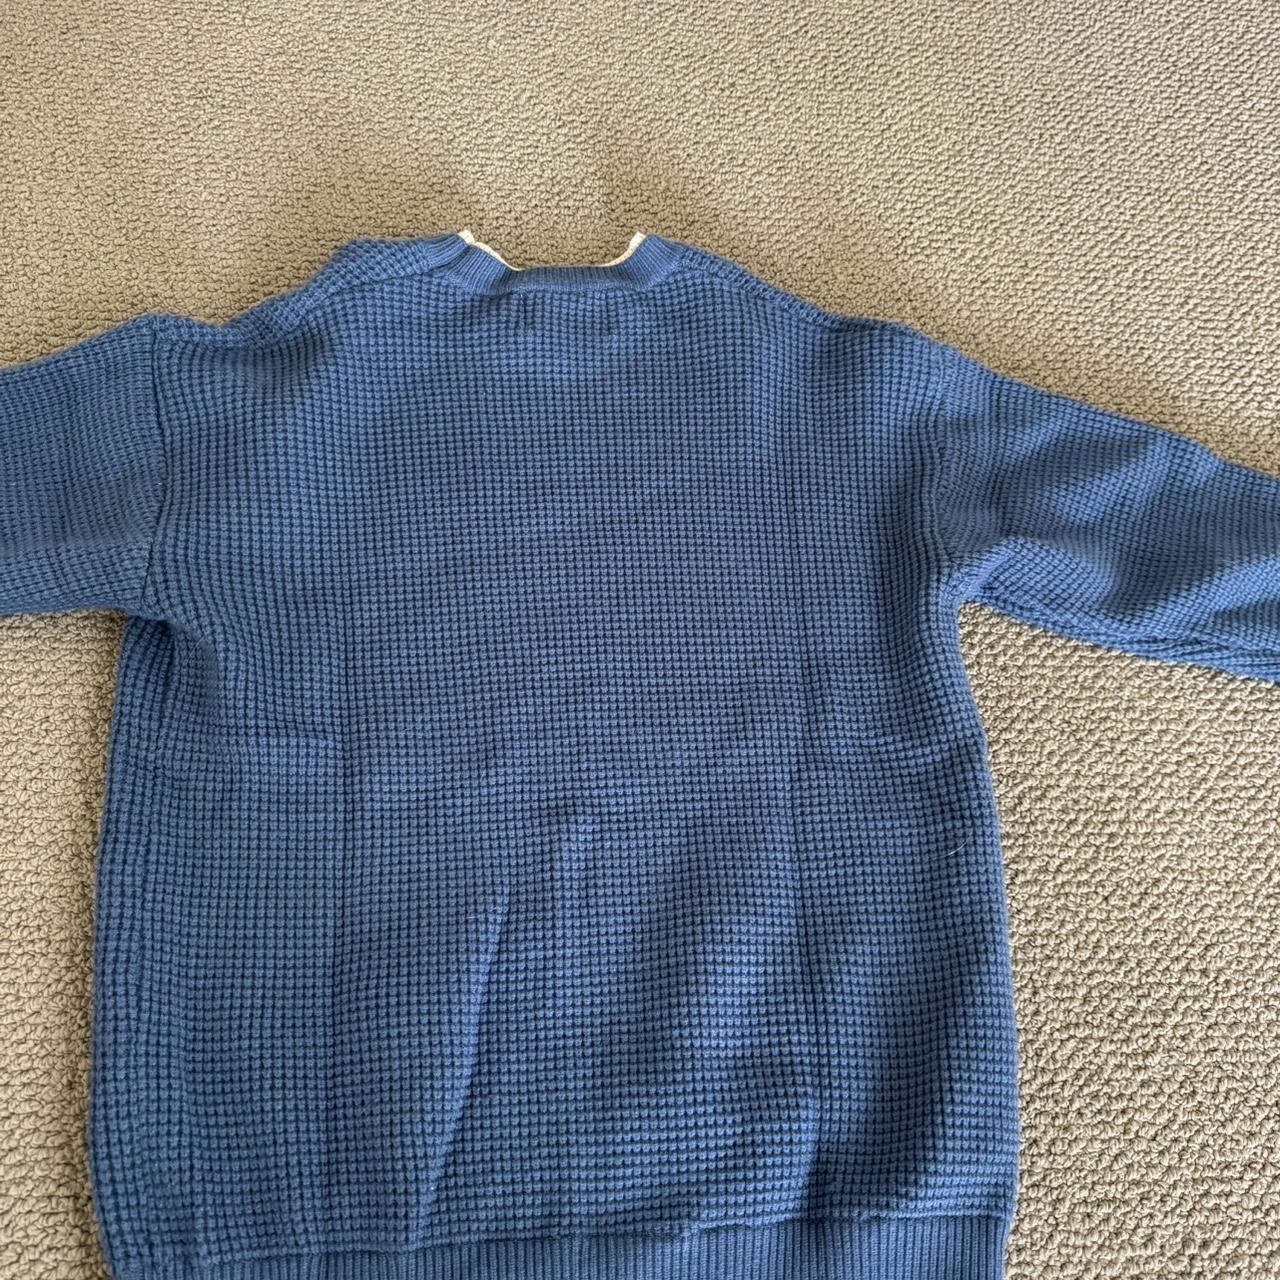 Aelfric Eden sweater - Depop